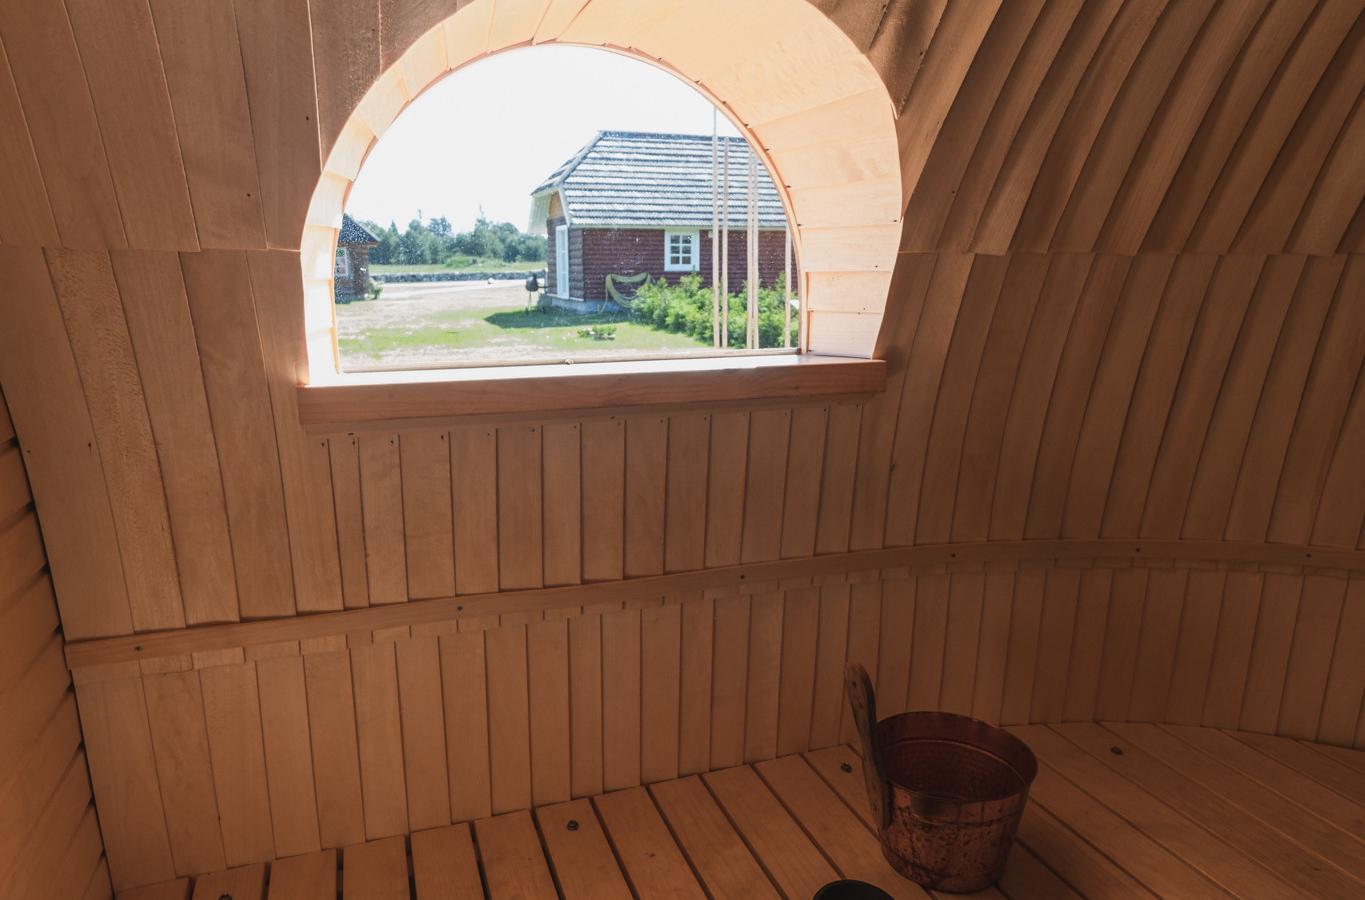 A view of the igloo sauna